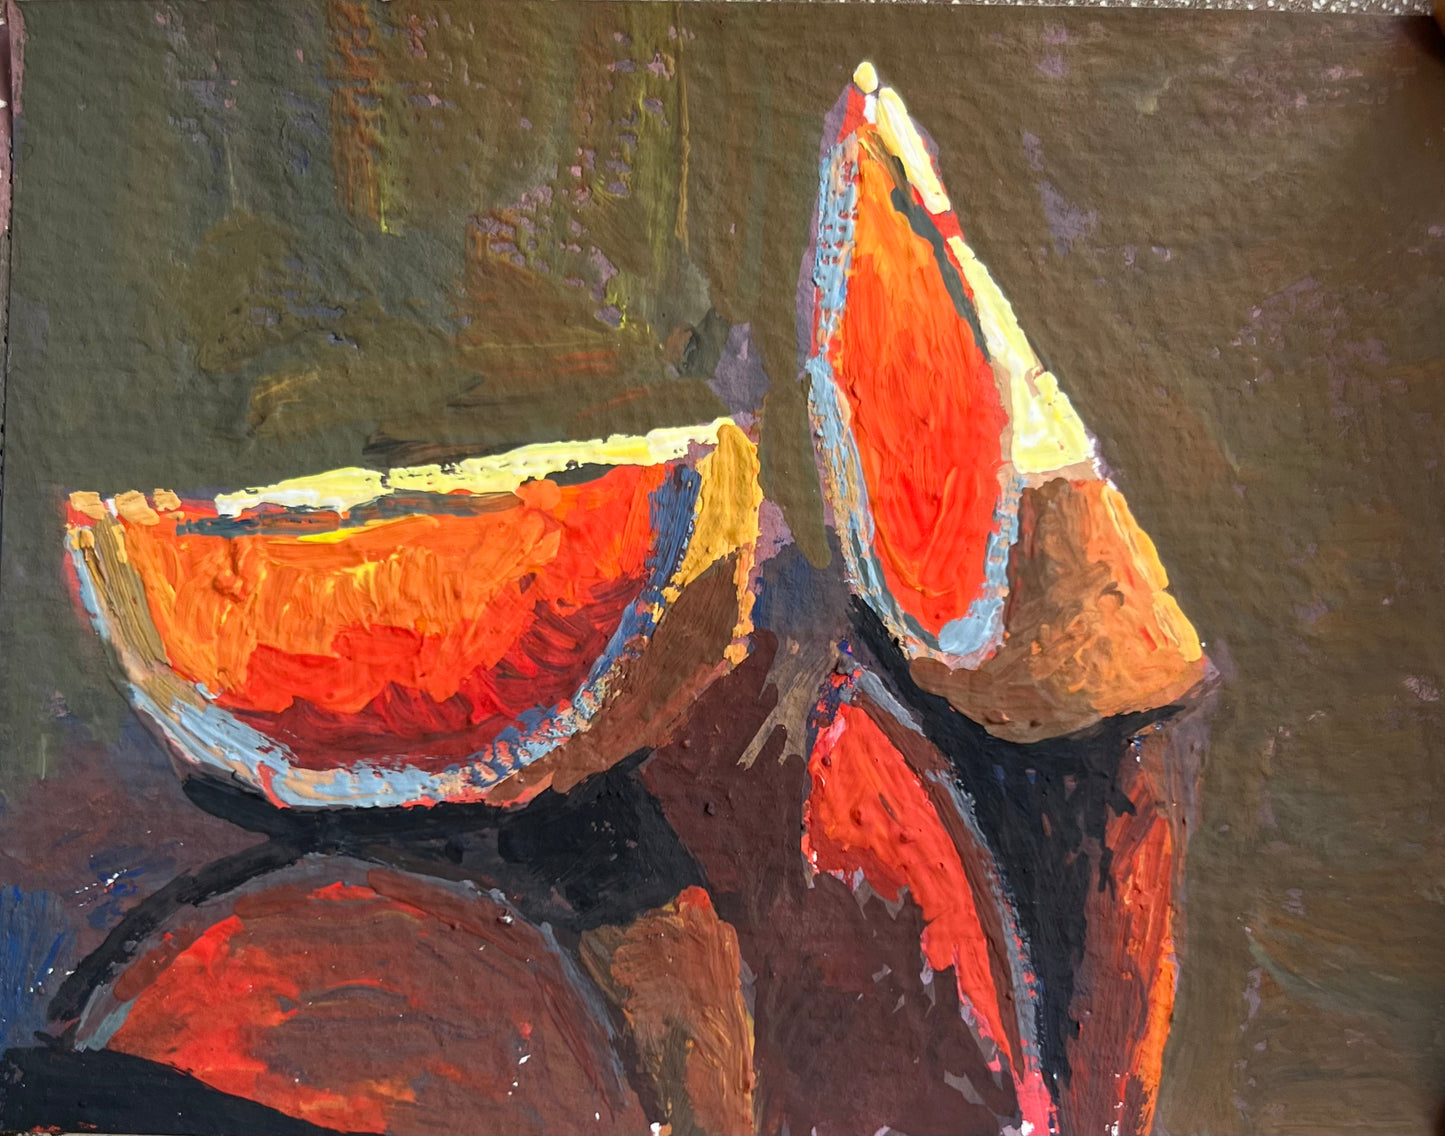 Mini Gouache Painting - Sunlit Grapefruit Slices